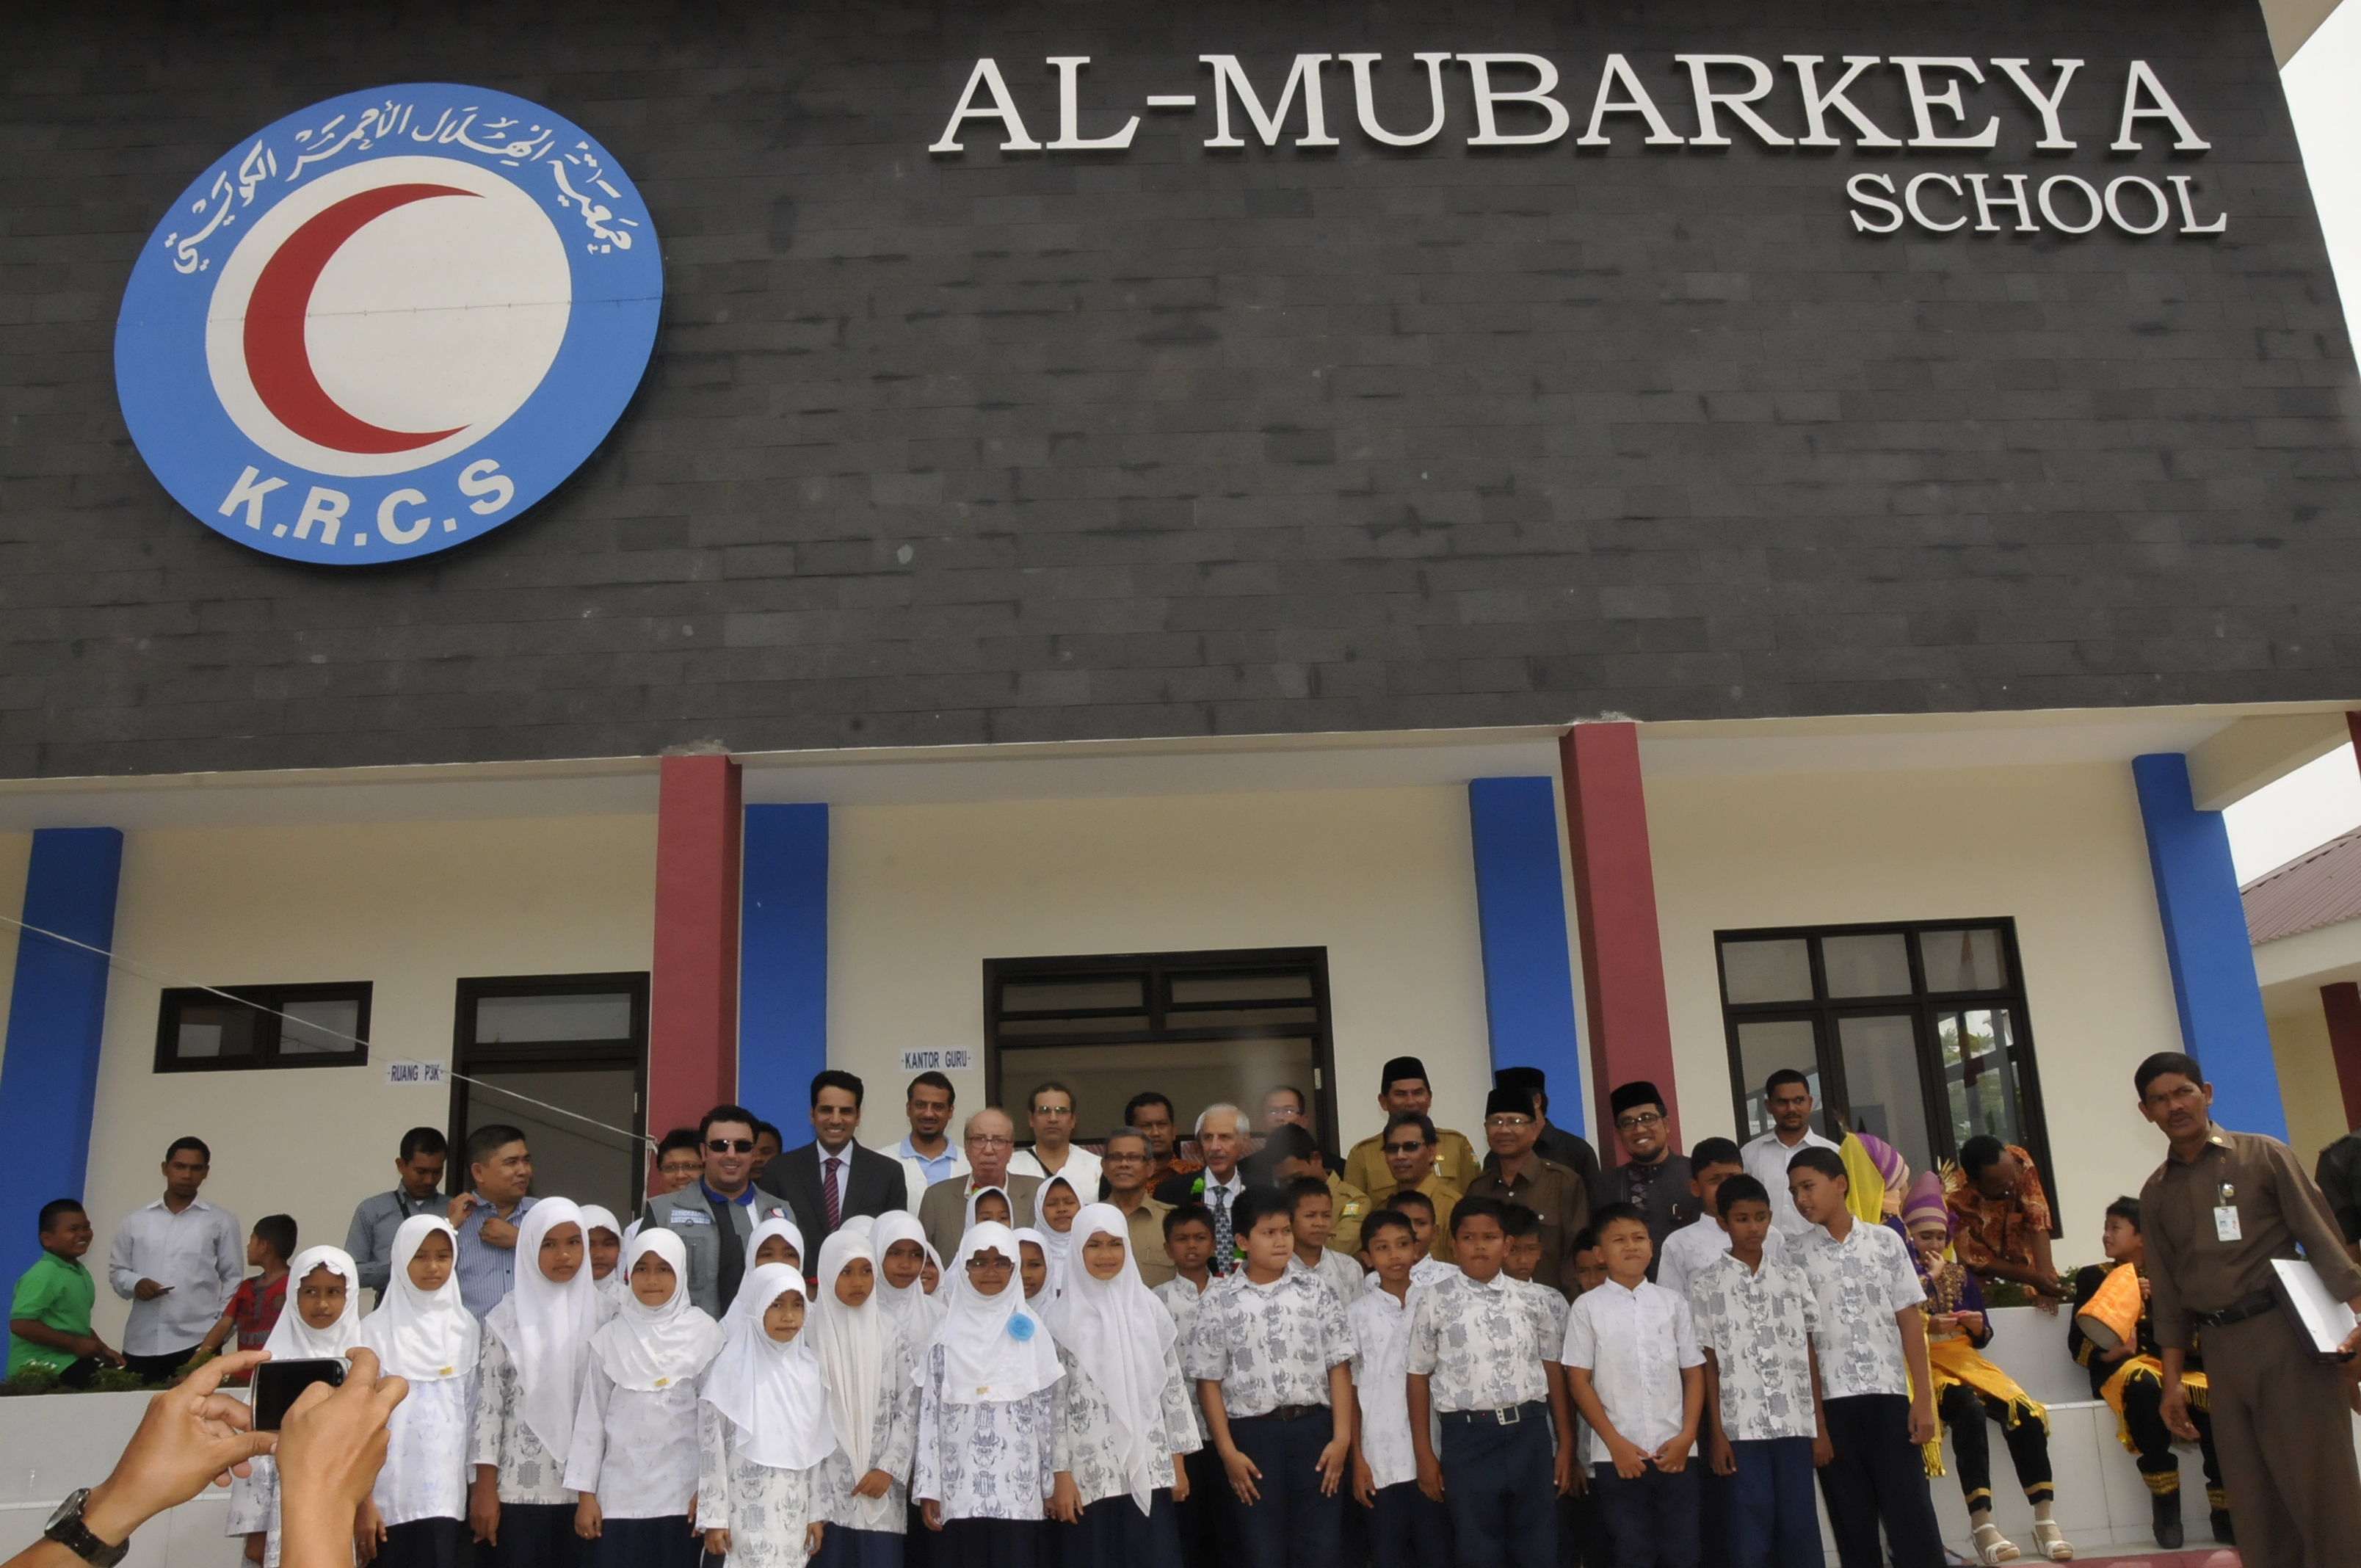 Al-Mubarakiya school a Kuwaiti-funded school in the Indonesian city of Banda Aceh